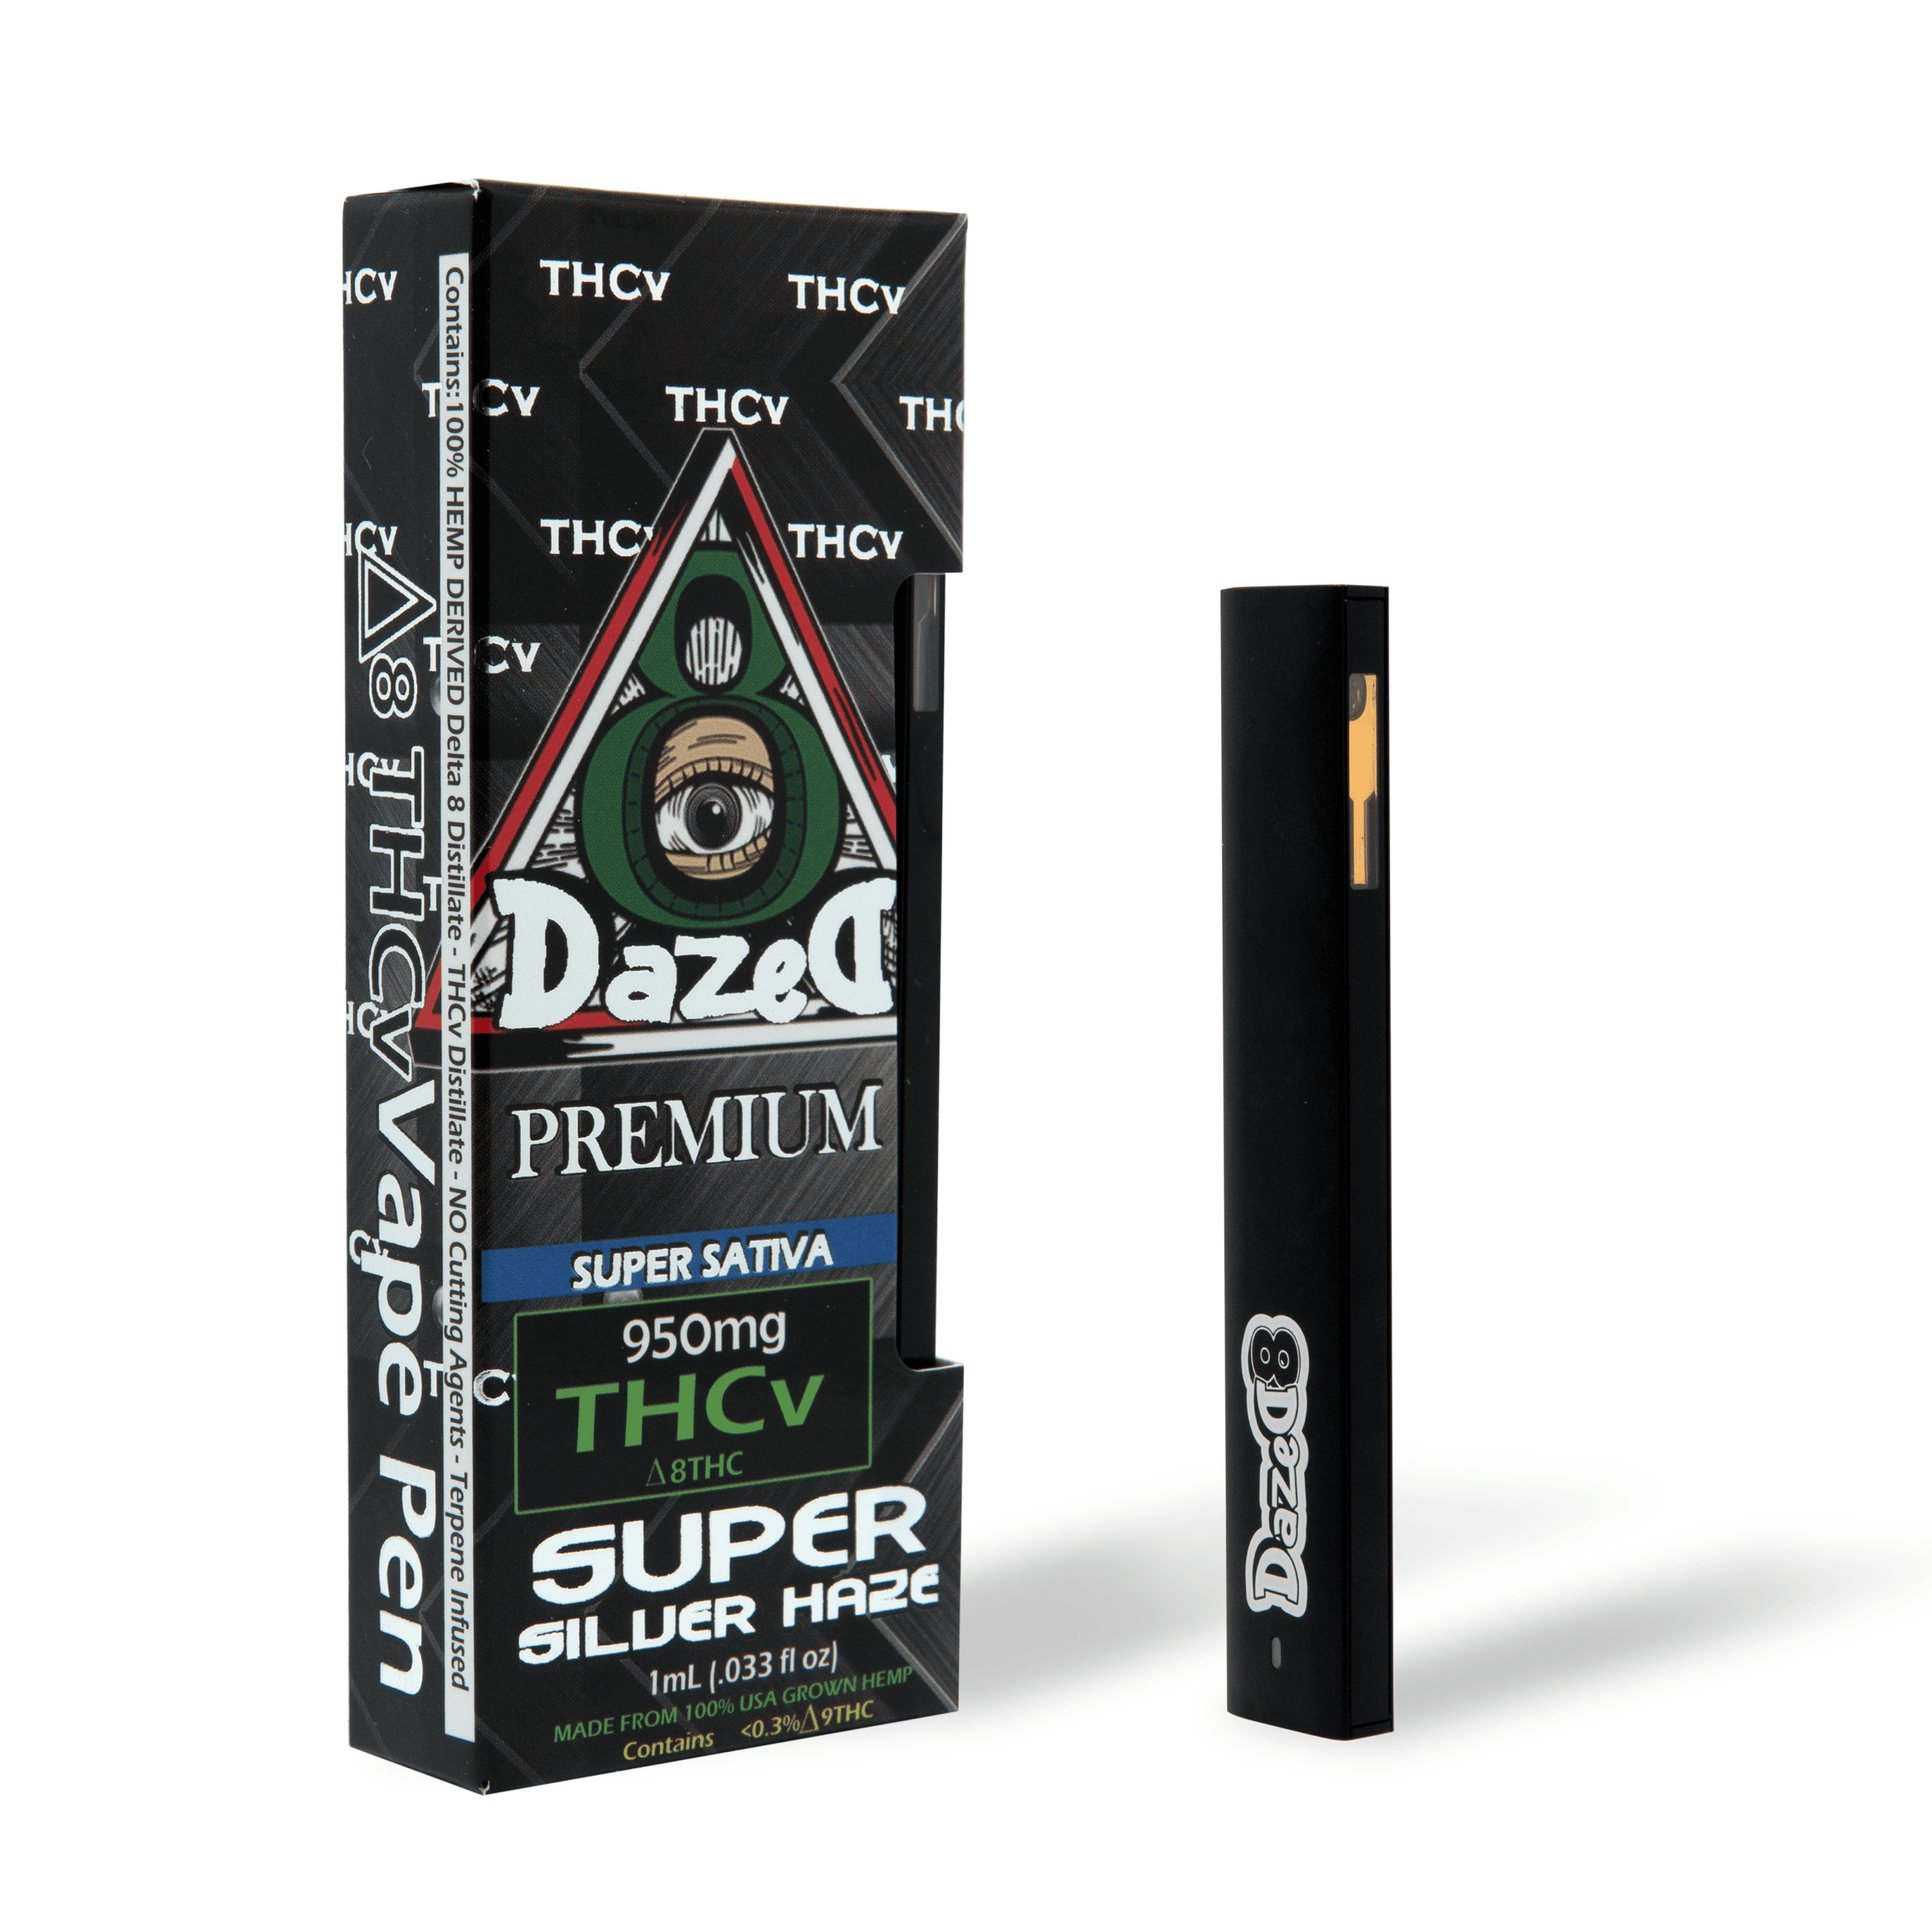 DazeD8 Super Silver Haze Delta 8 THCV Disposable (1g) Best Price